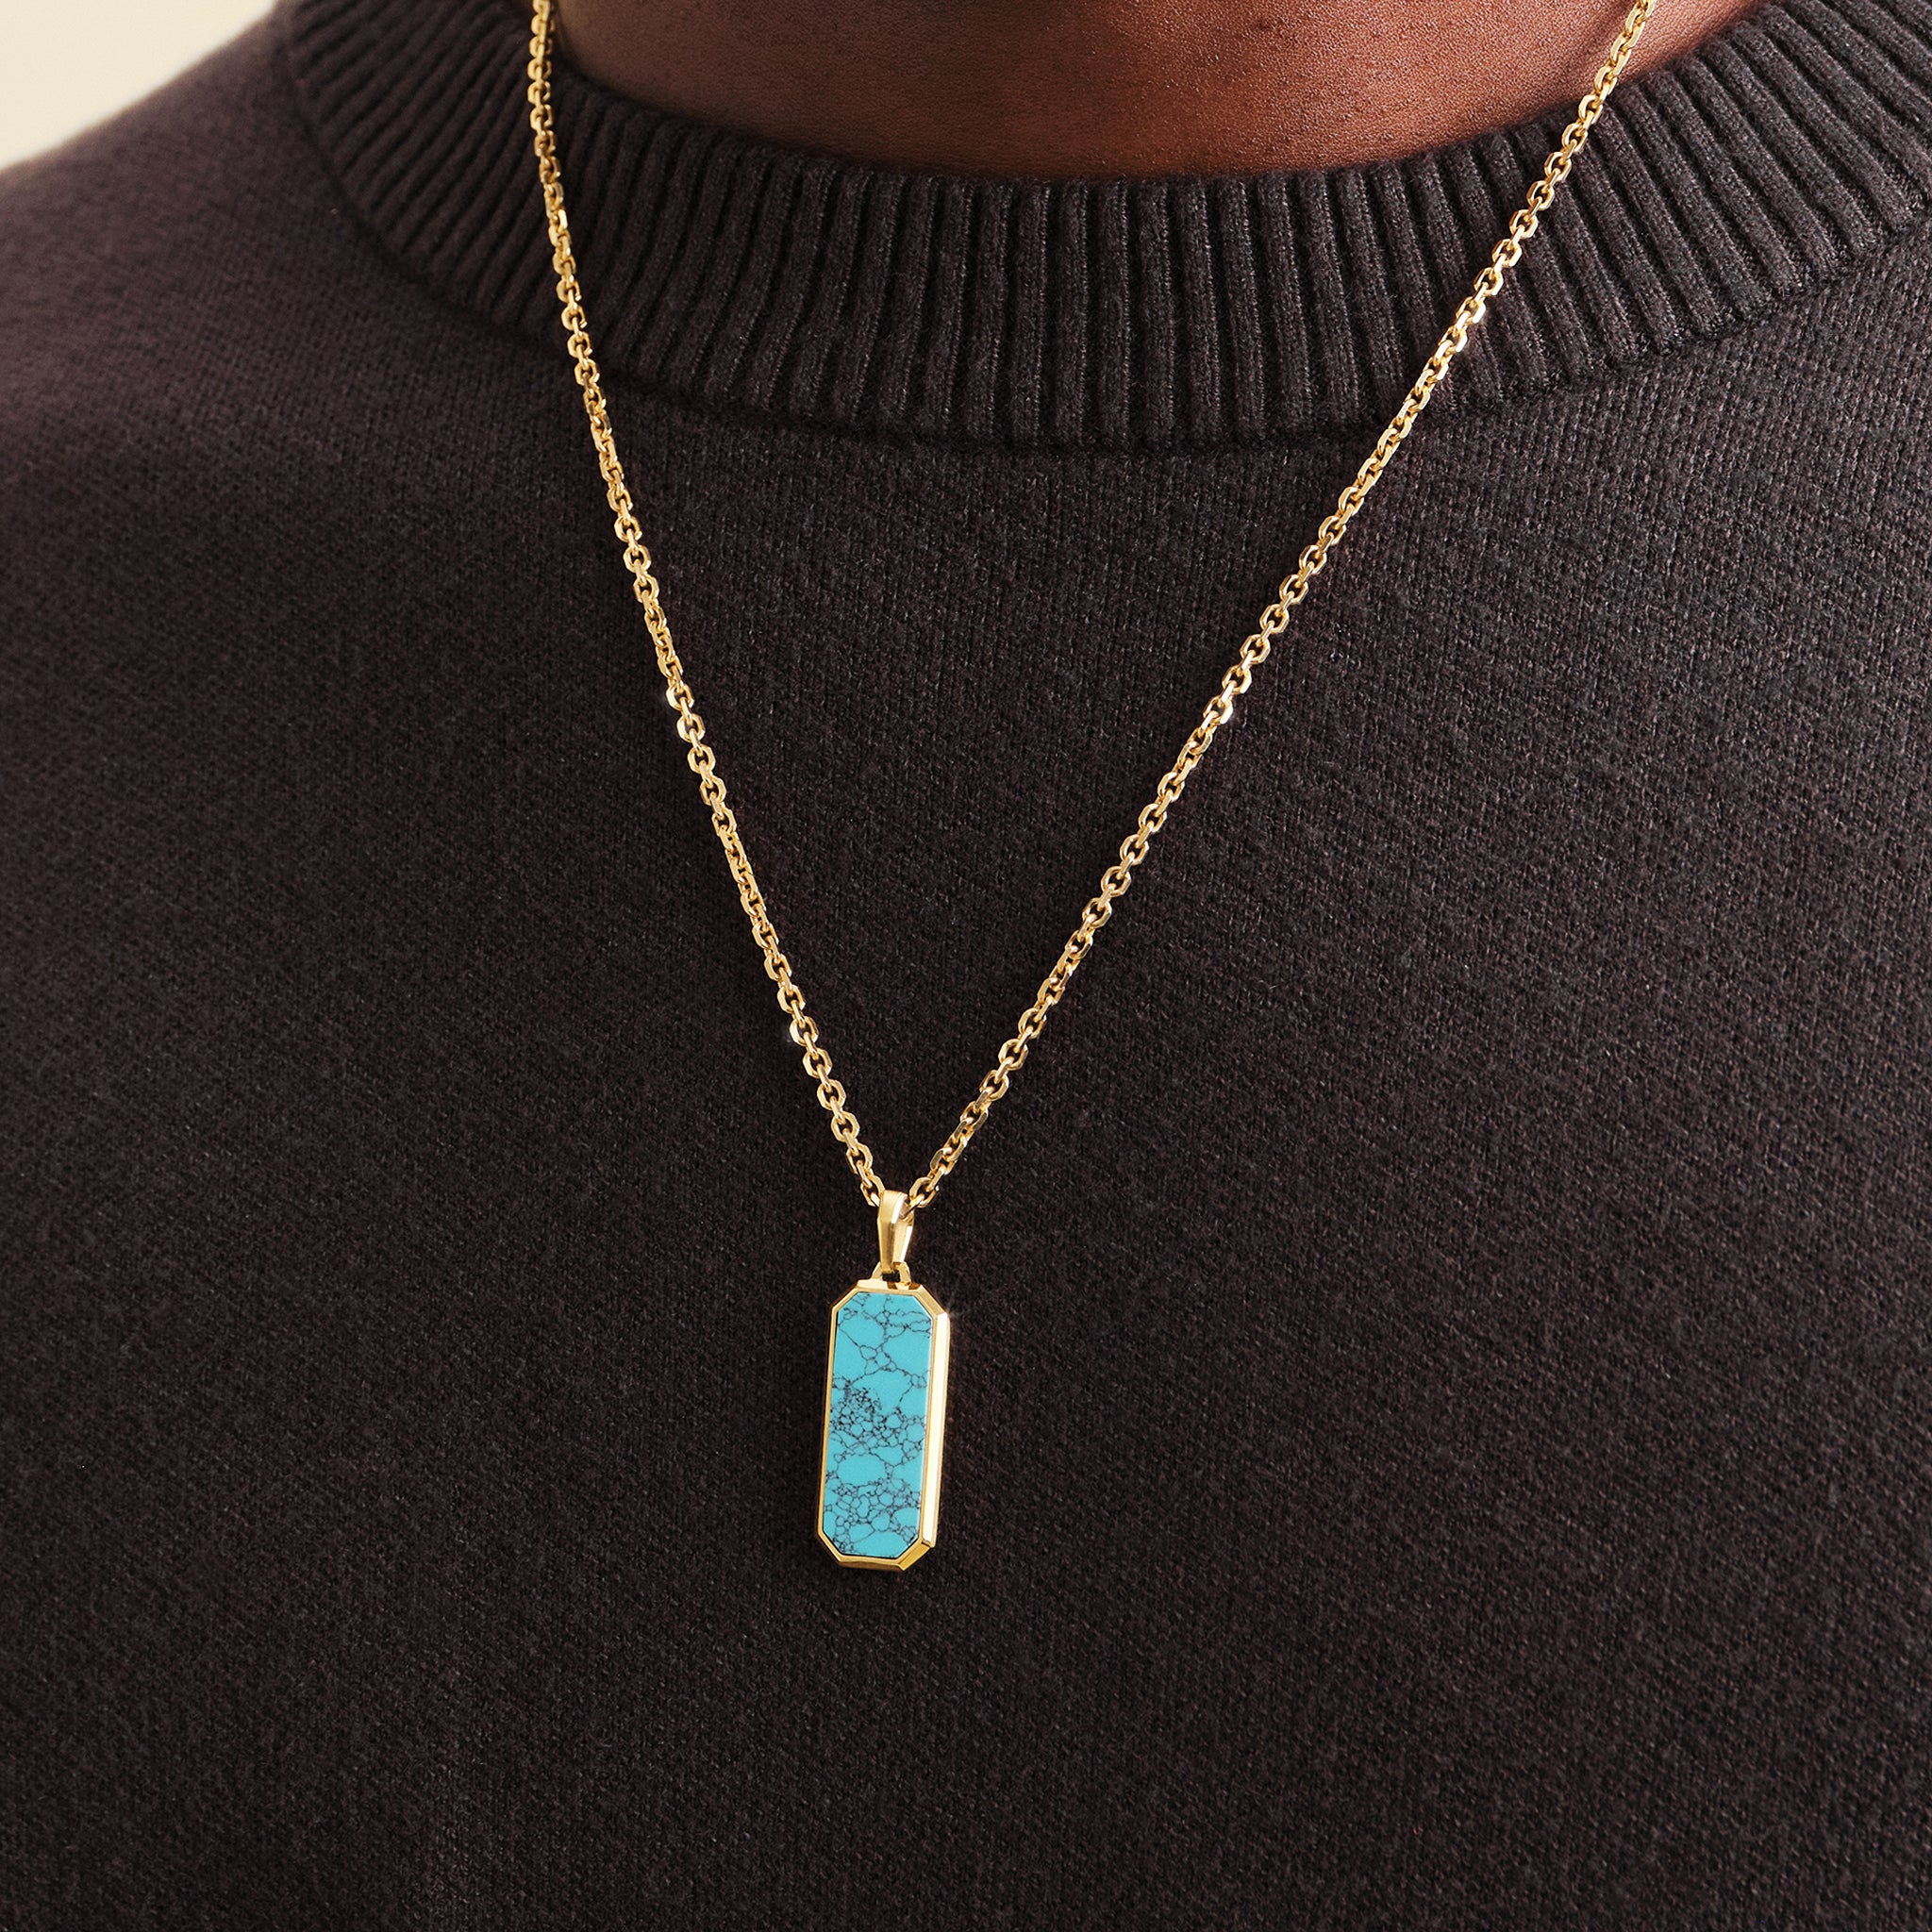 Bezel Gemstone Round Pendant Necklace - Gold Plated Chain - Turquoise  (16-24